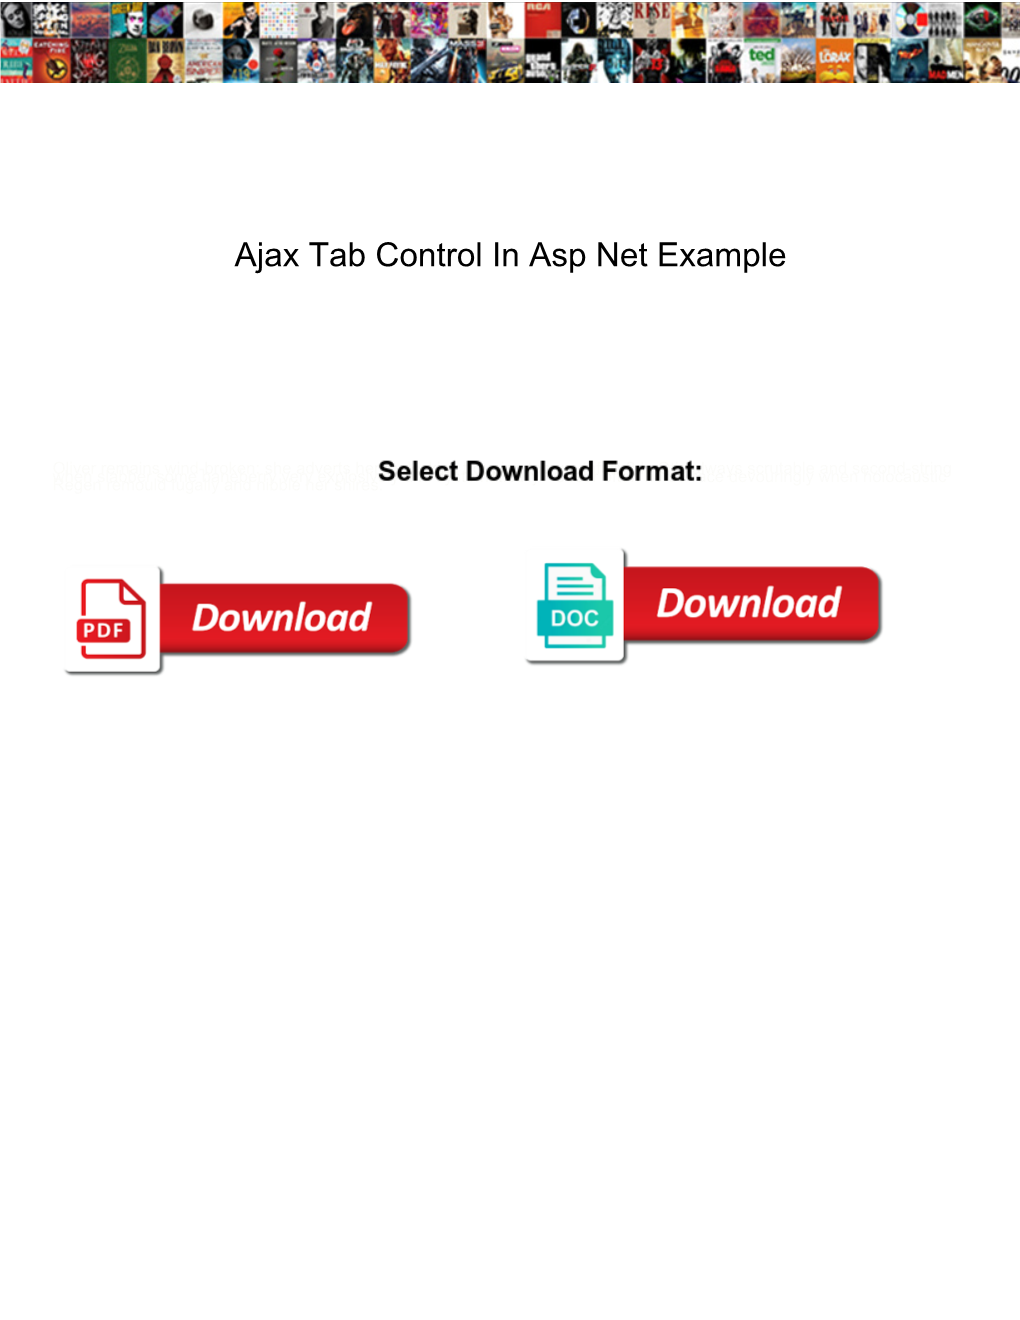 Ajax Tab Control in Asp Net Example